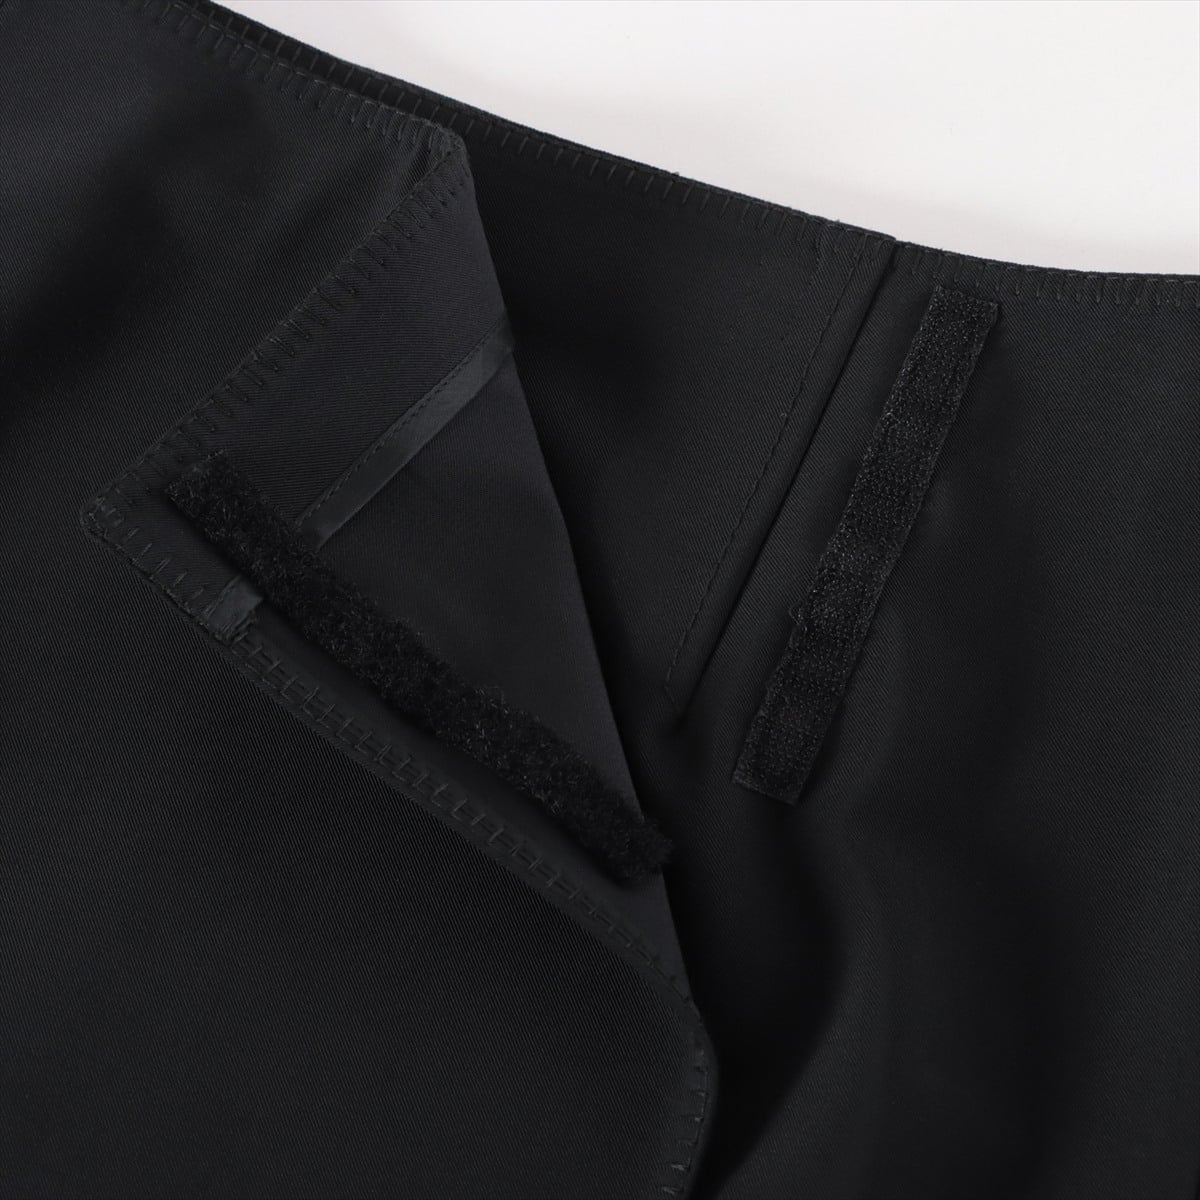 Prada Polyester Skirt 38 Ladies' Black